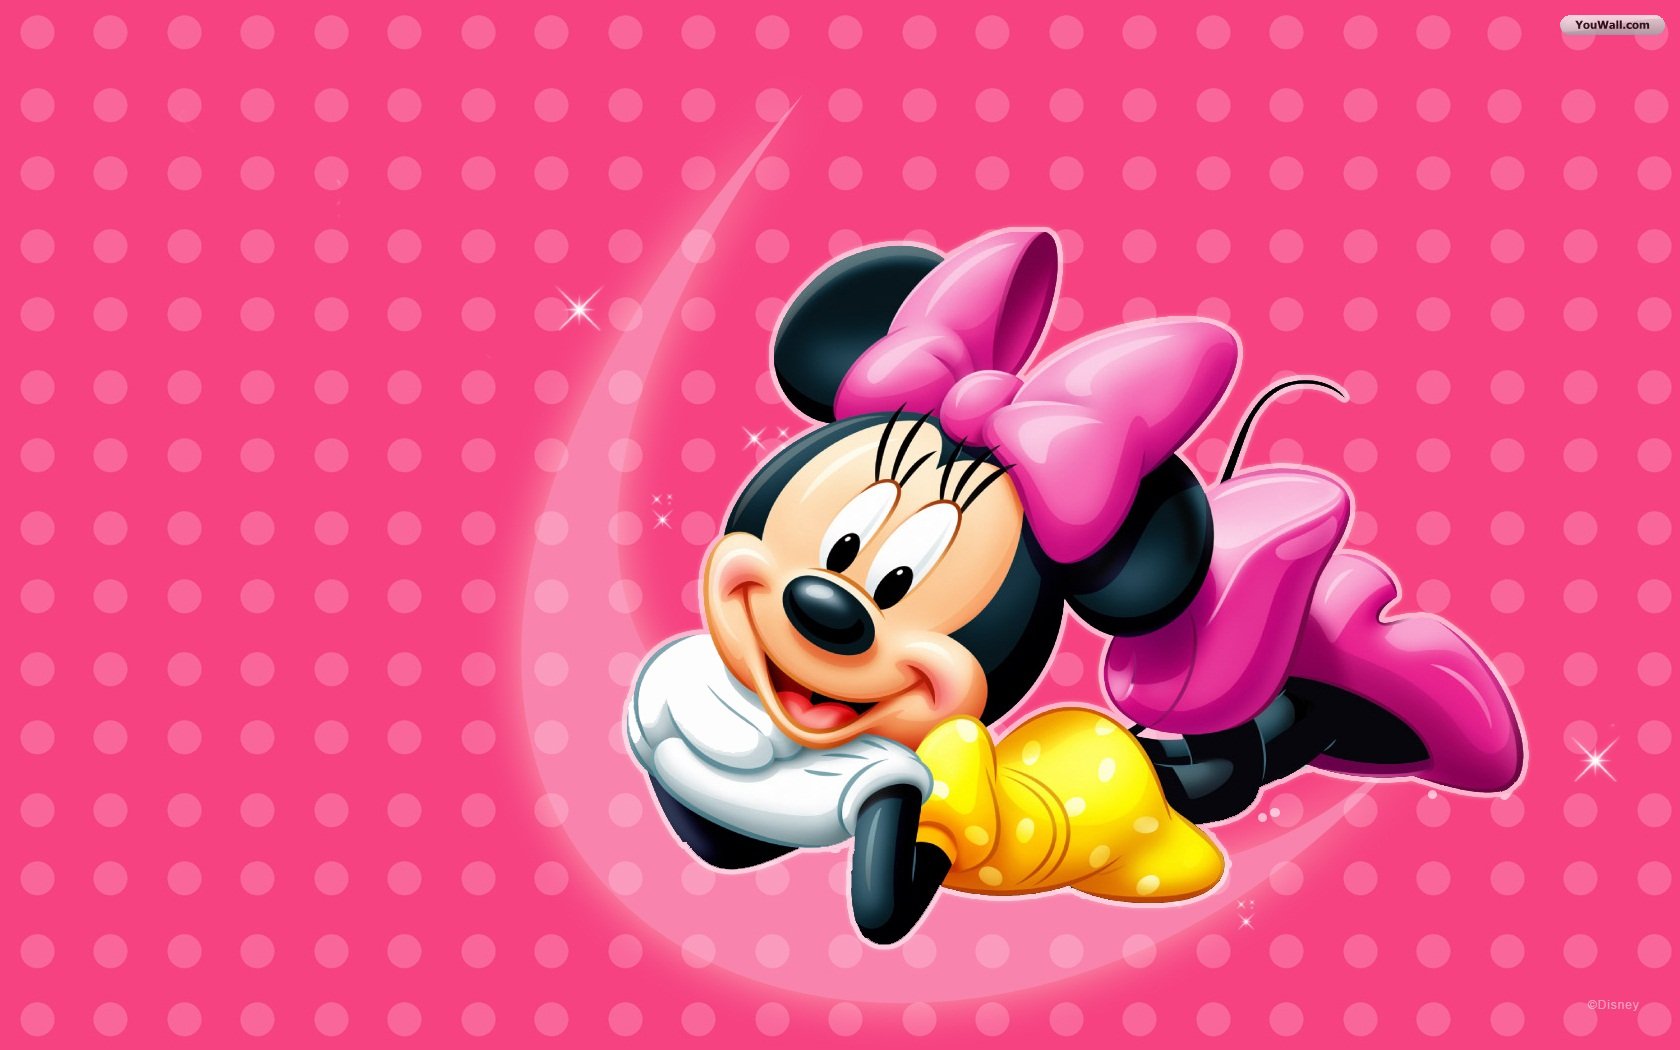 45+] Minnie Mouse Wallpaper HD - WallpaperSafari